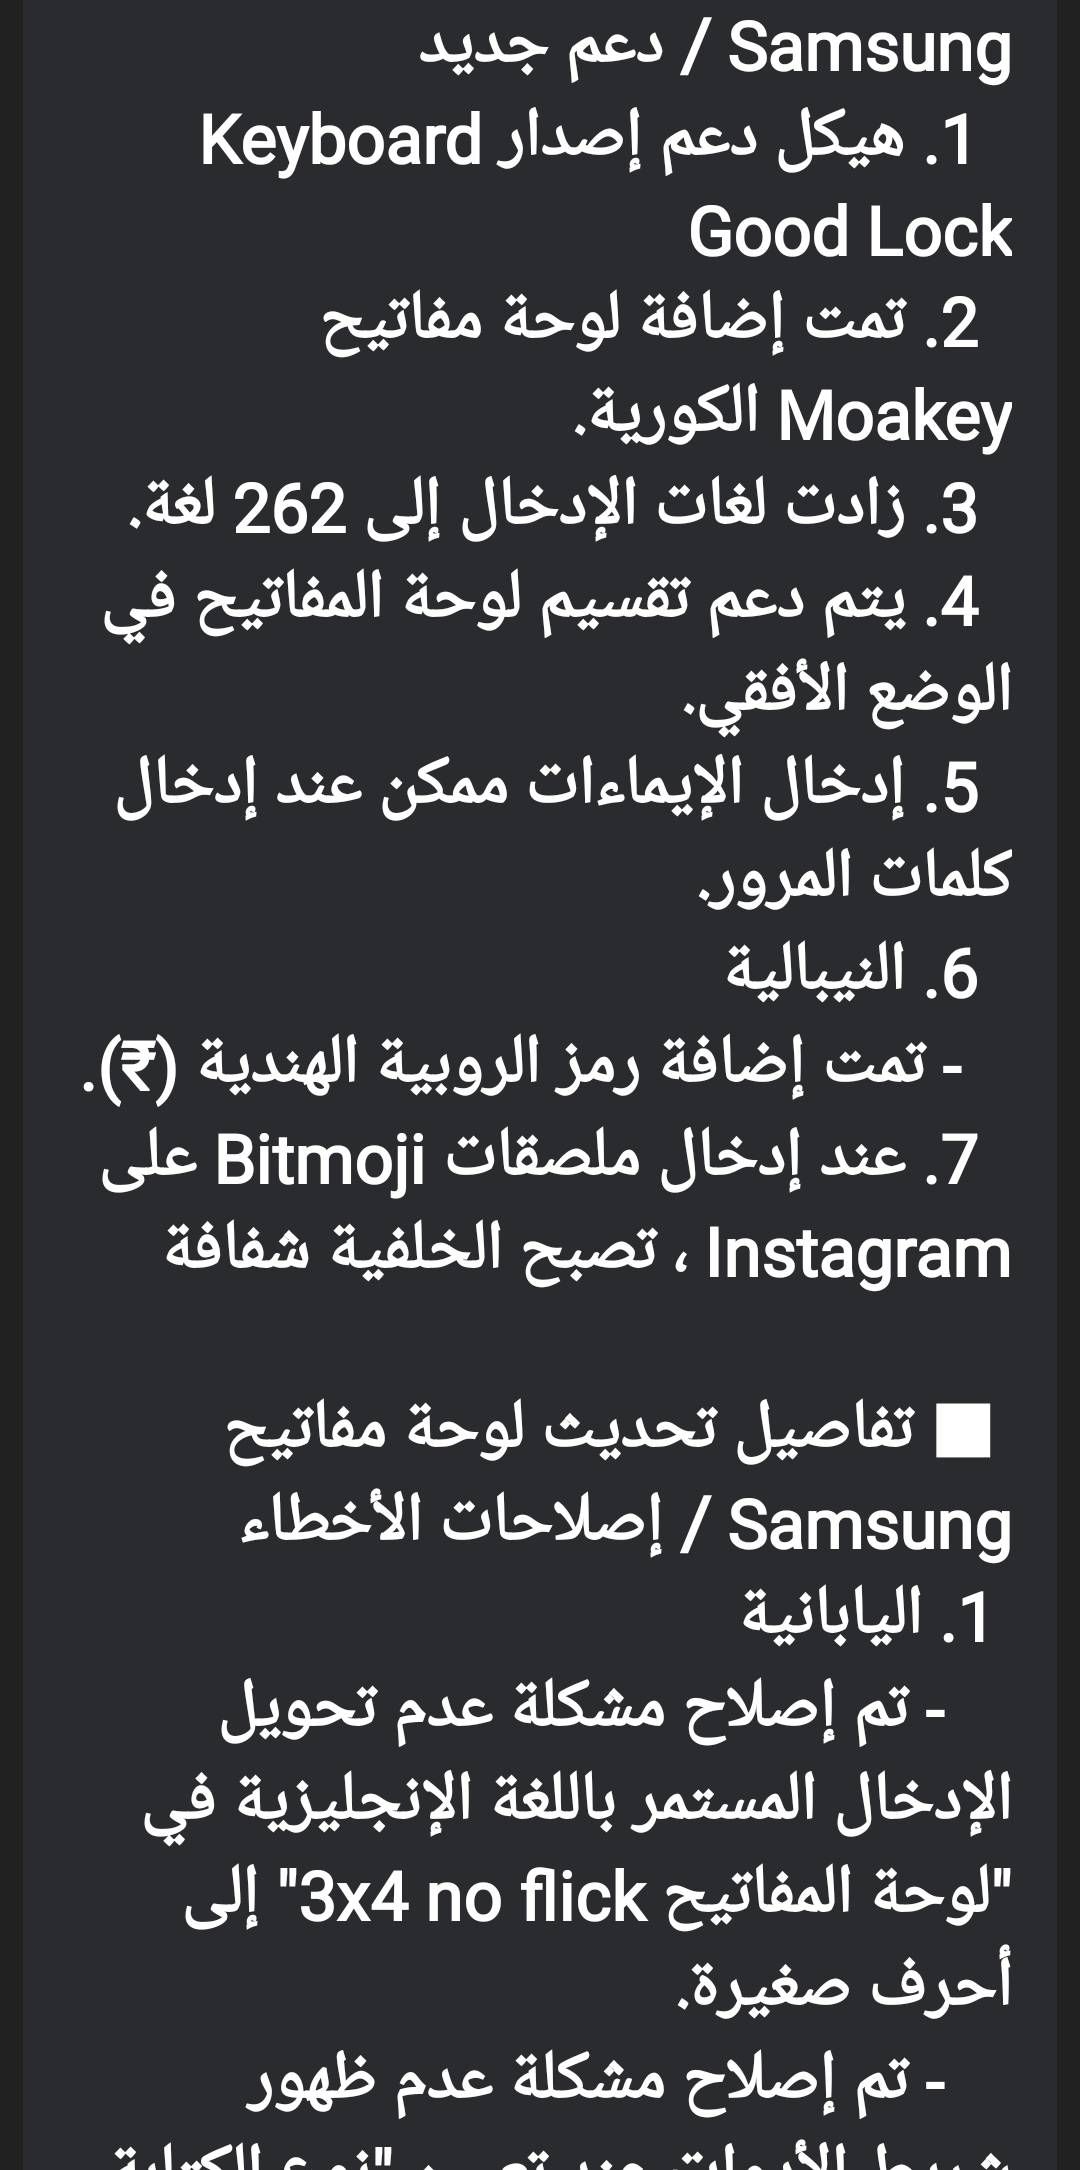 نبي رمز الريال - Samsung Members